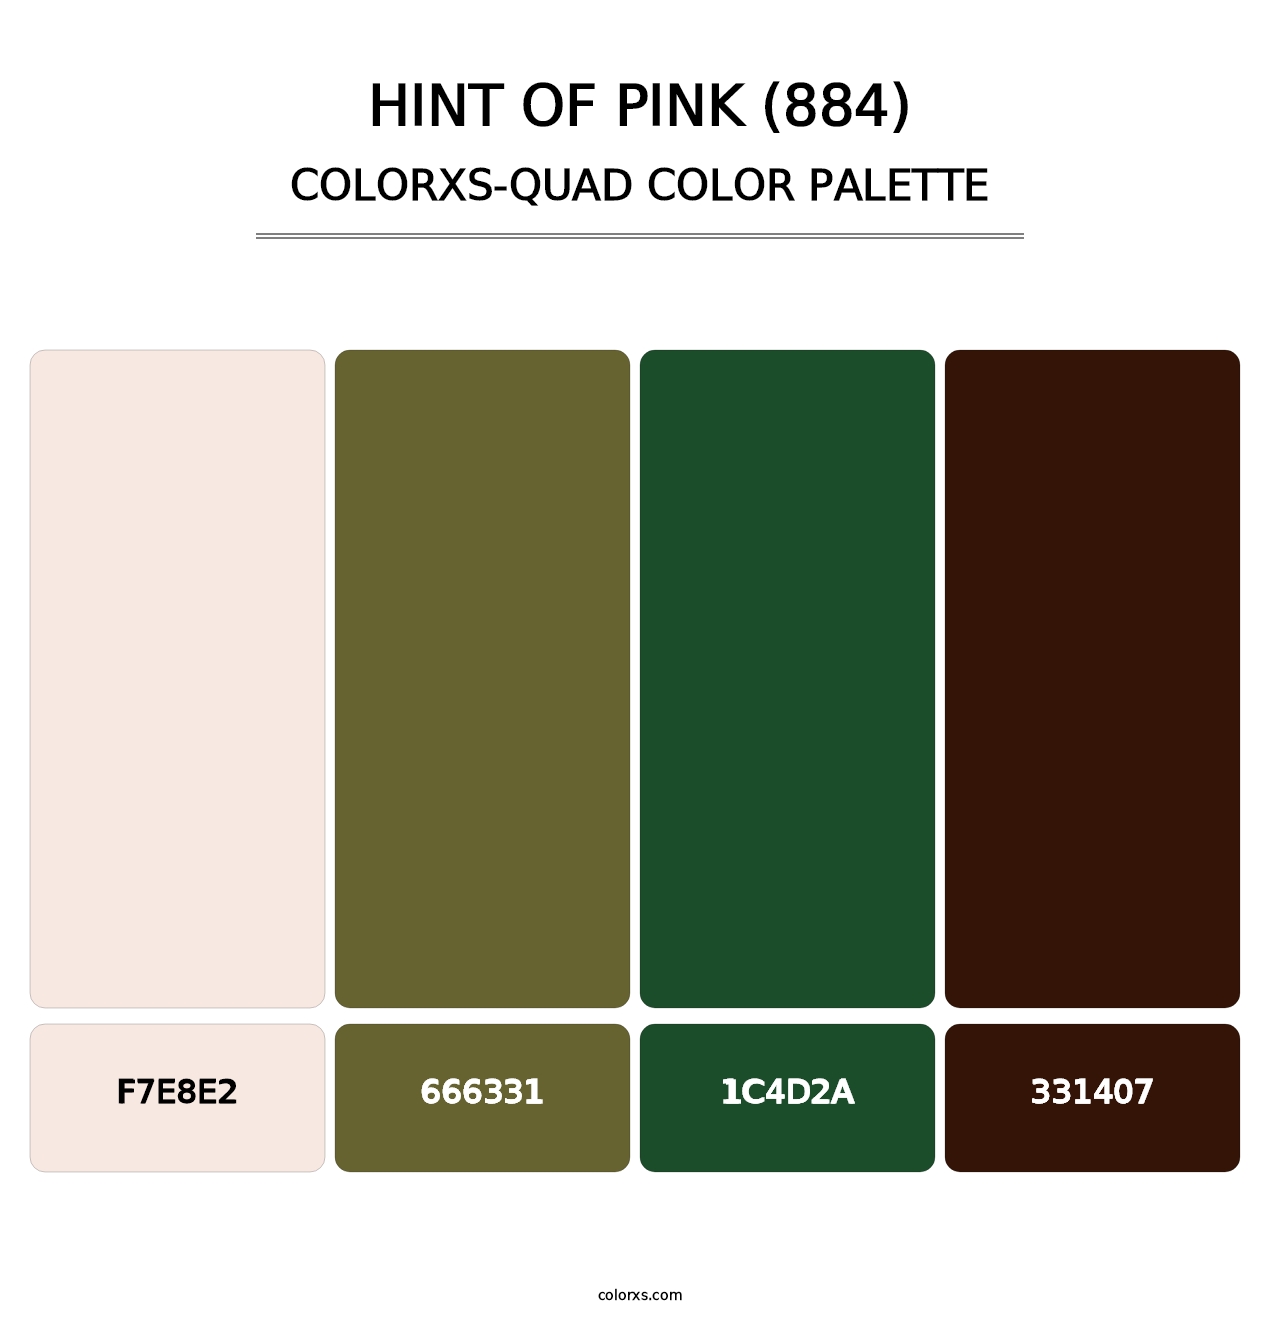 Hint of Pink (884) - Colorxs Quad Palette